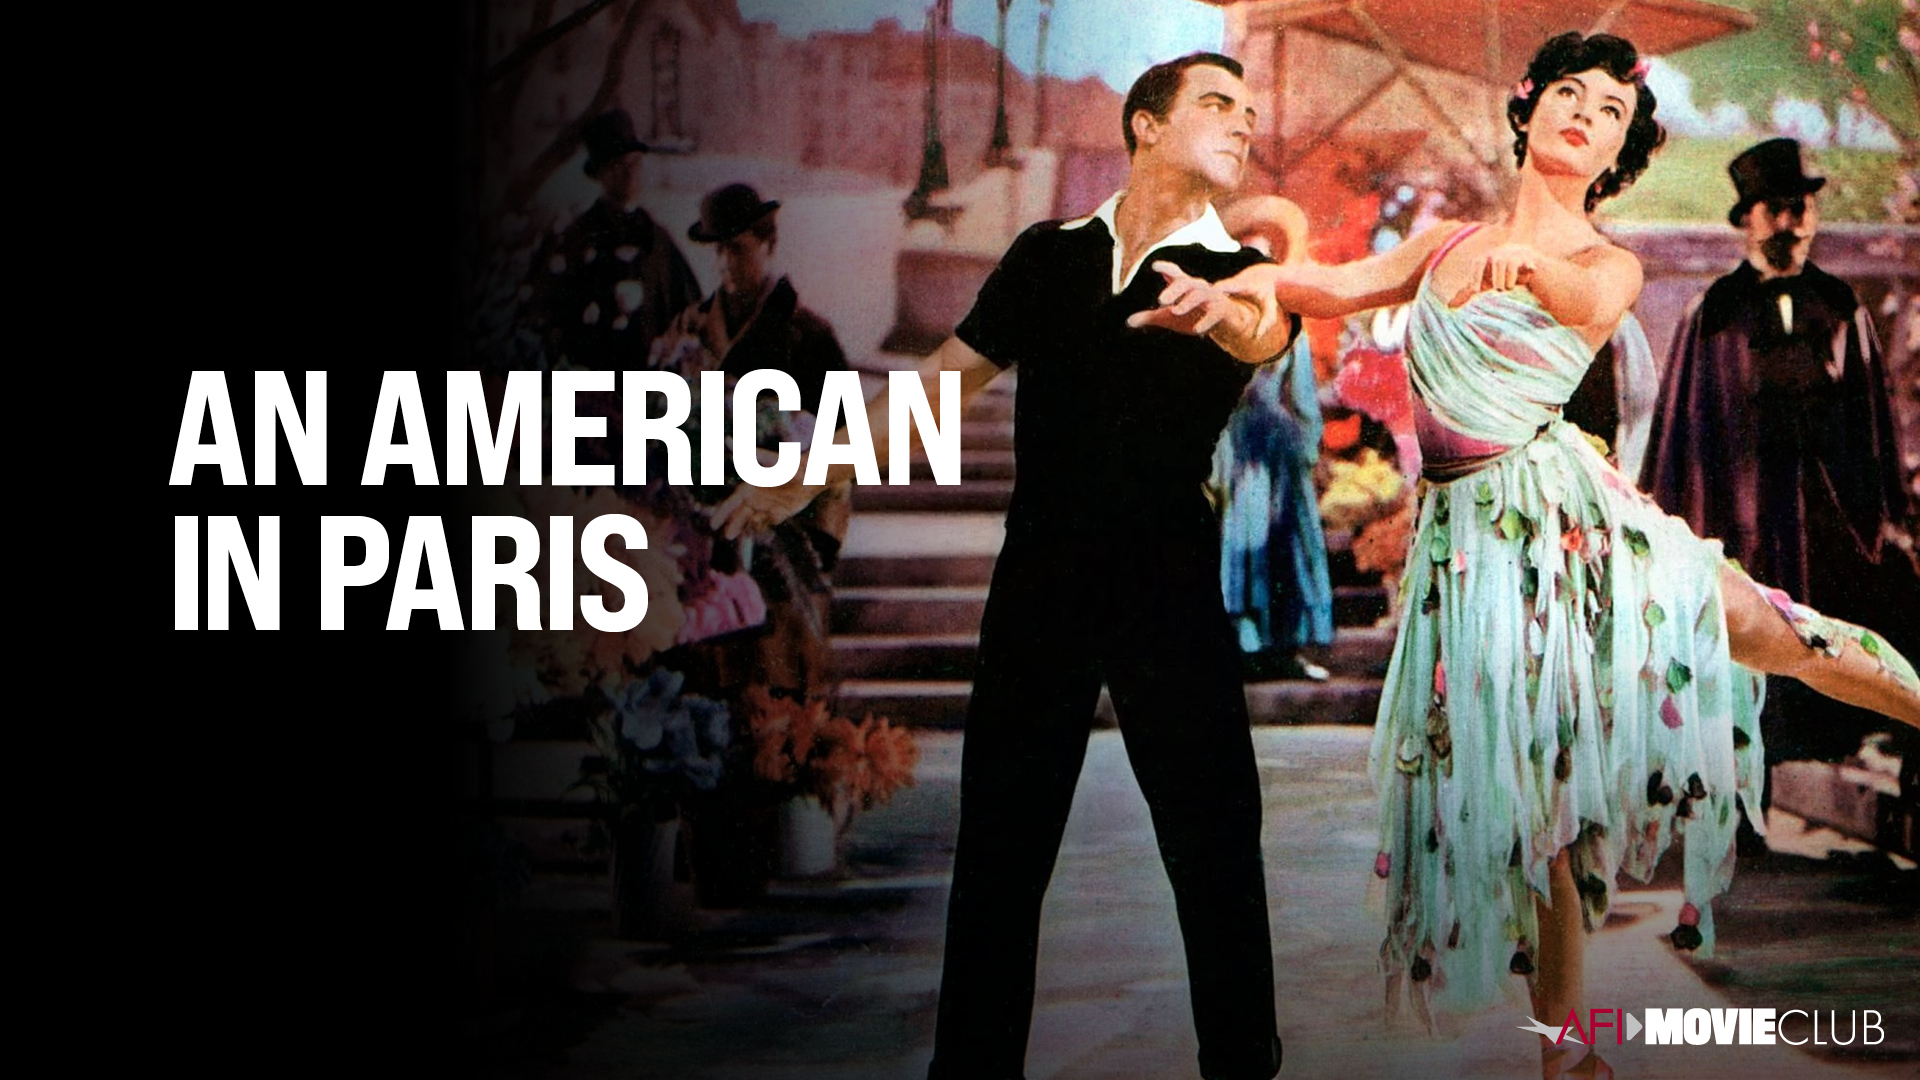 An American in Paris Film Still - Gene Kelly and Leslie Caron